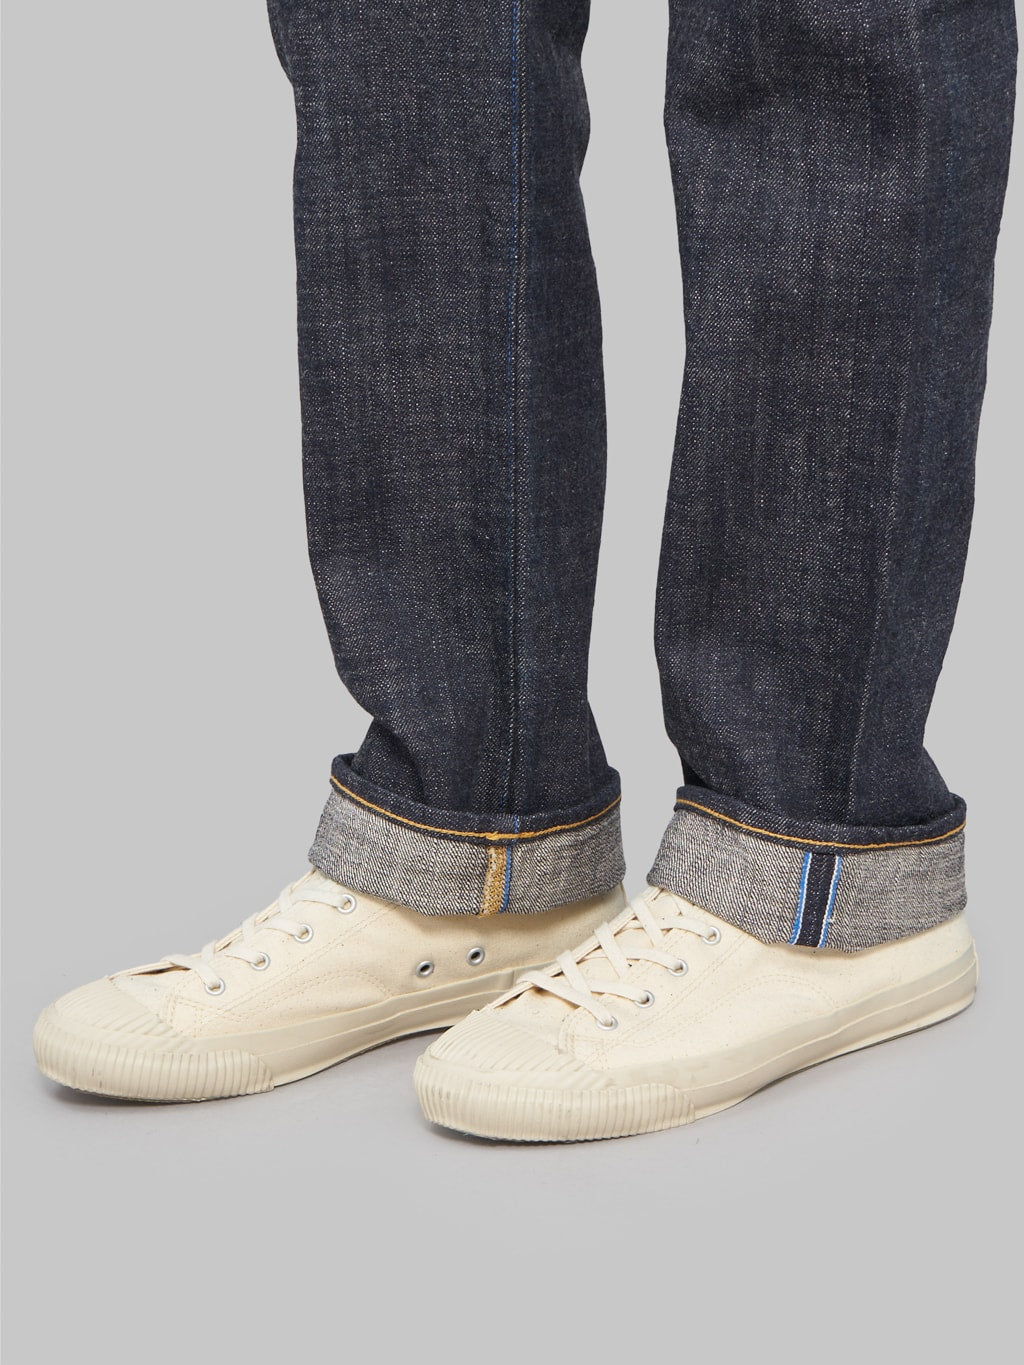 Tanuki ZR "Zetto" 14oz Regular Straight Jeans